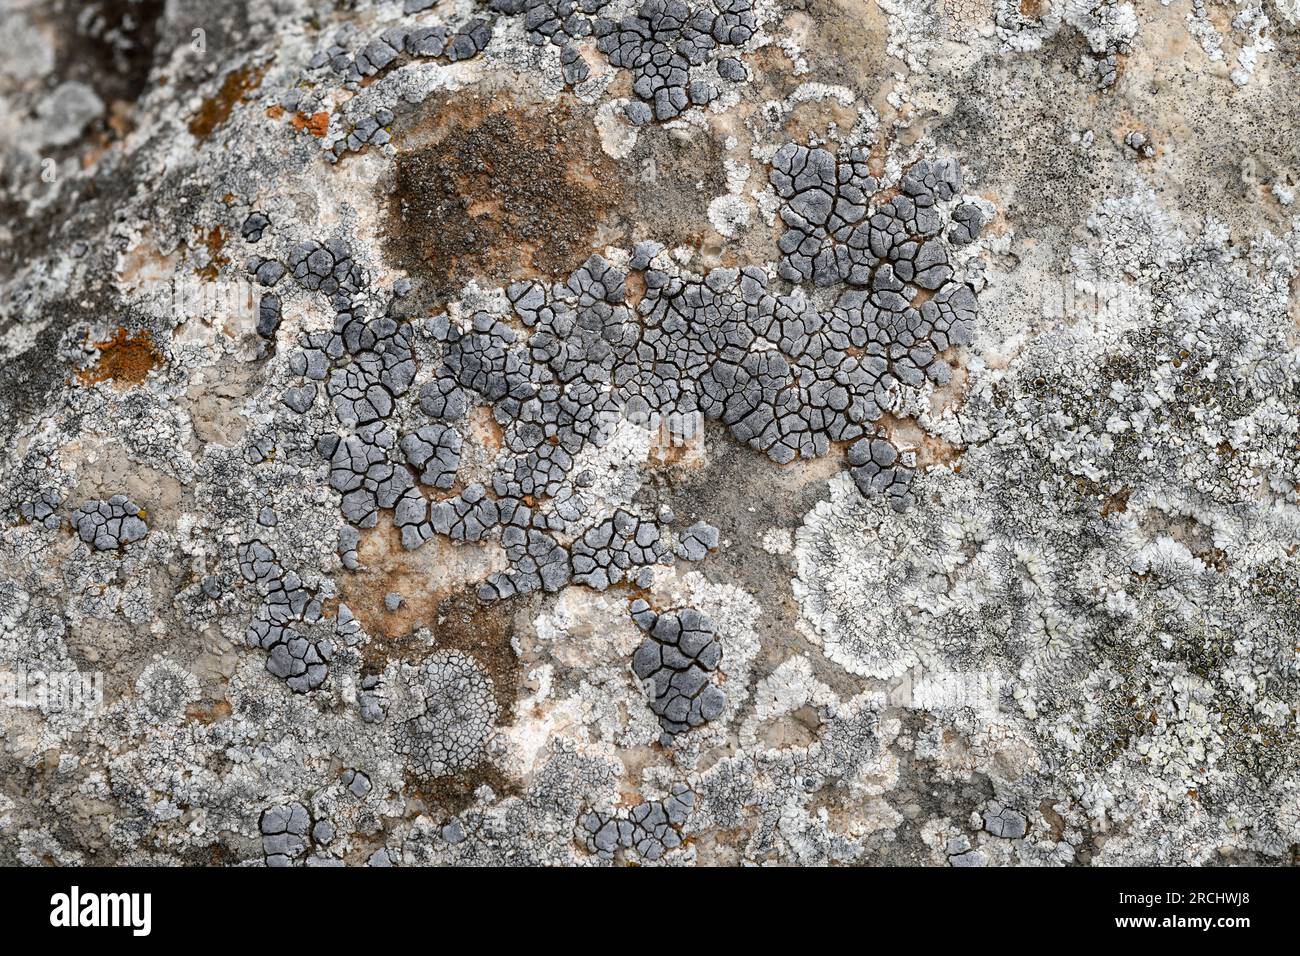 Placocarpus schaereri, Verrucaria schaereri or Dermatocarpon monstrosum  is a crustose lichen that grows on calcareous rocks. This photo was taken in Stock Photo